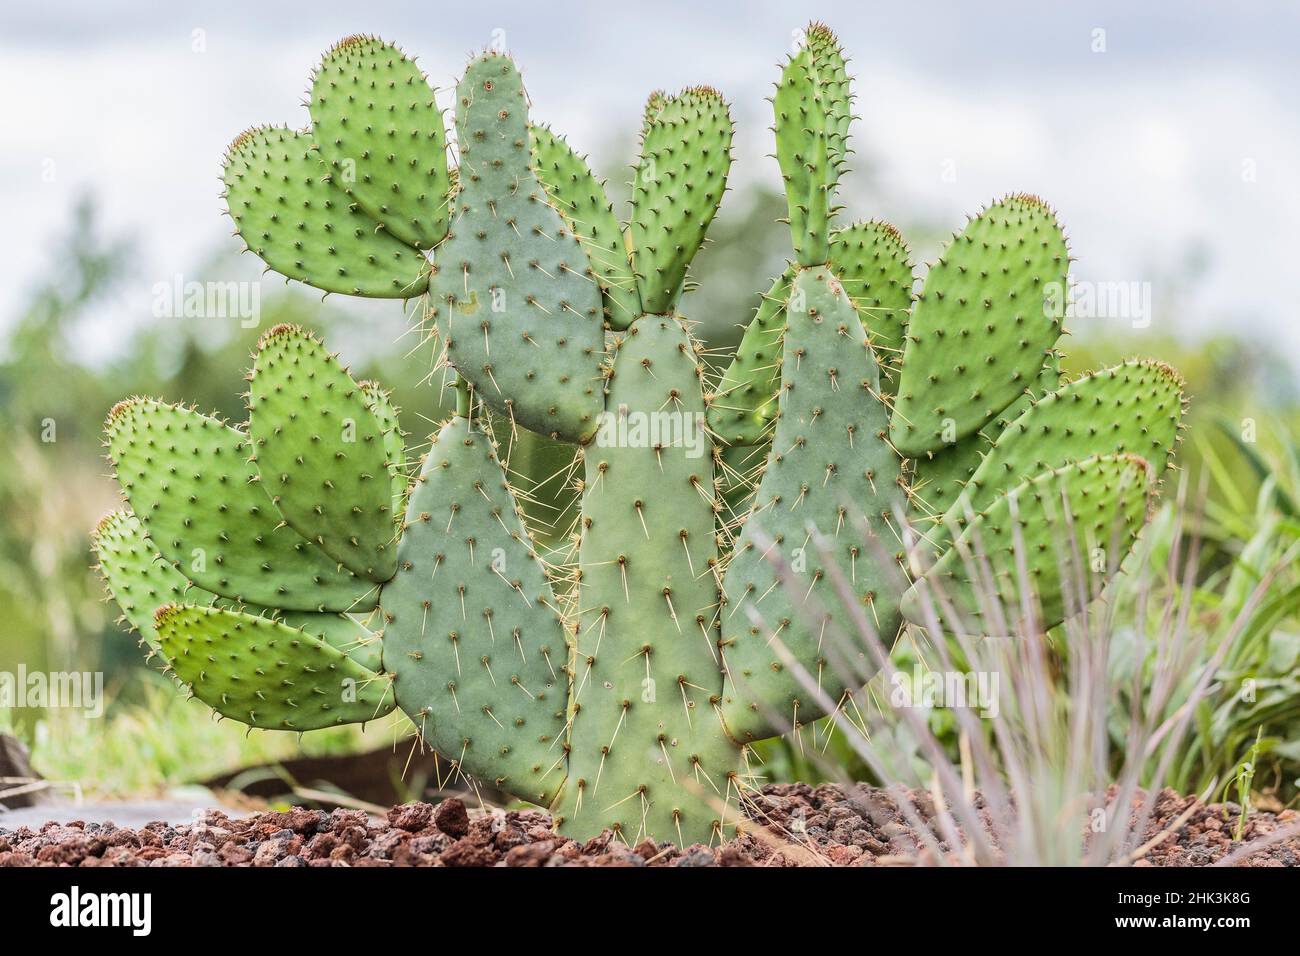 Cow's Tongue Prickly Pear Cactus (Opuntia linguiformis) Stock Photo